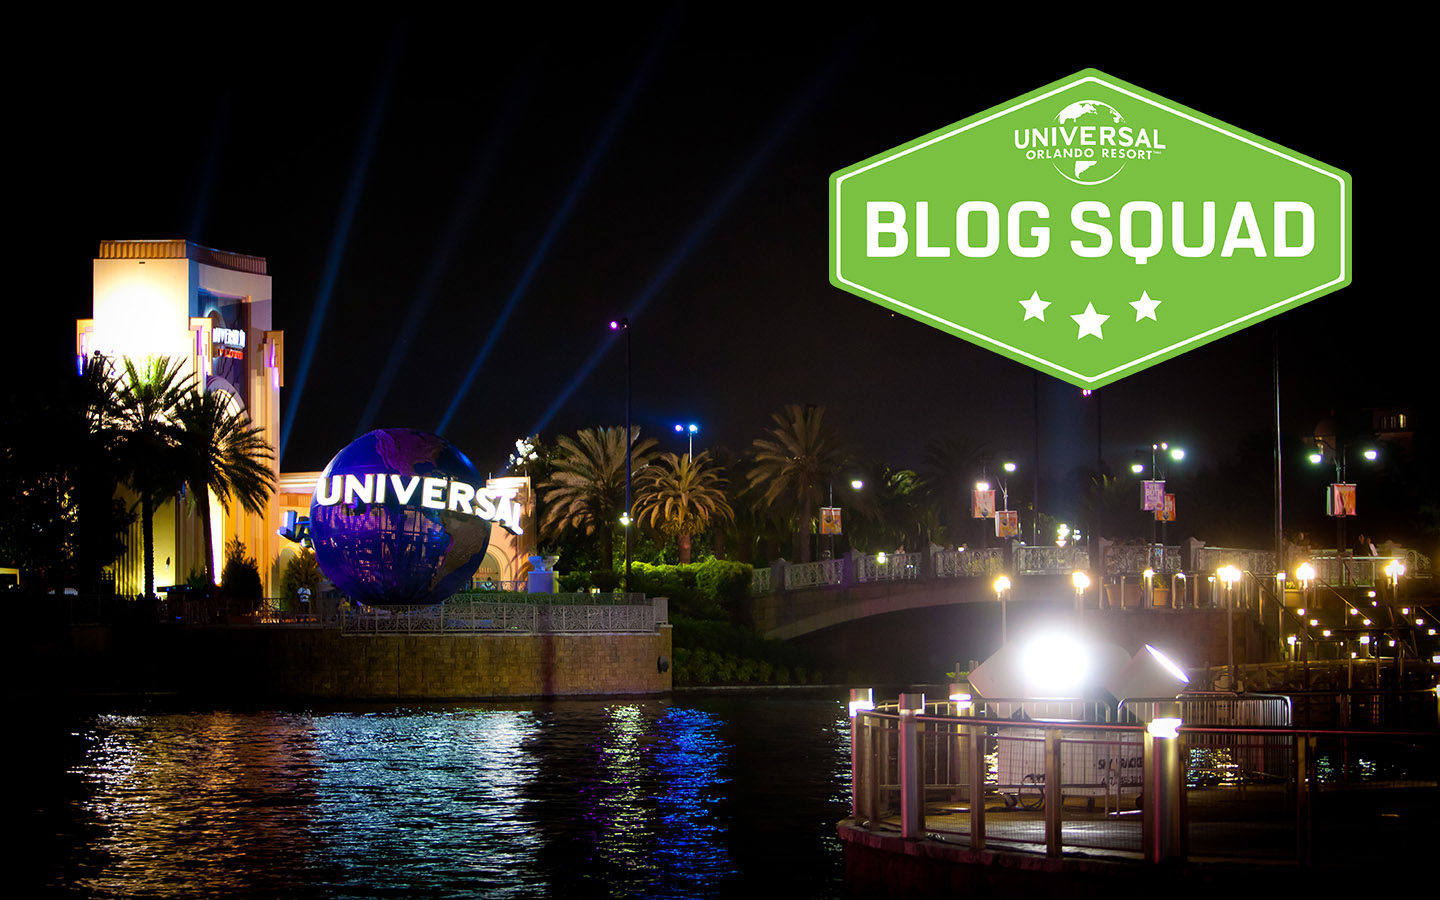 Universal-Orlando-Welcomes-Blog-Squad-2018-1440x900